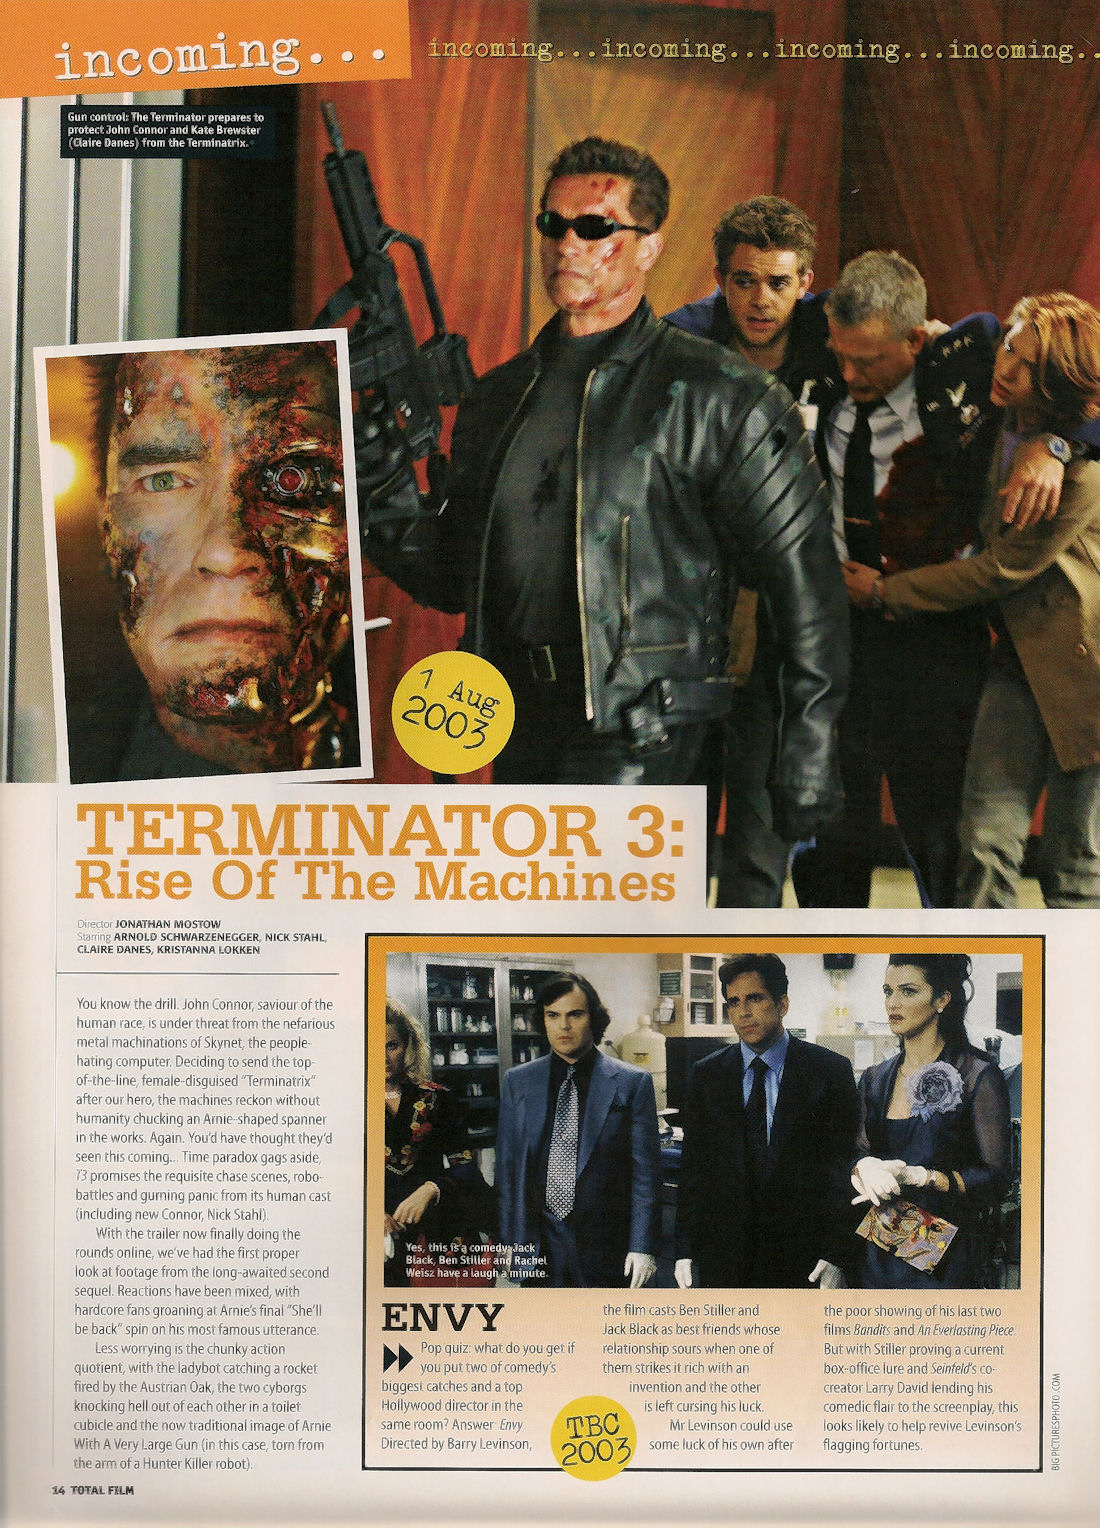 The Terminator - Total Film 2003 - Terminator 3 - PAGE 3
Keywords: ;media_review